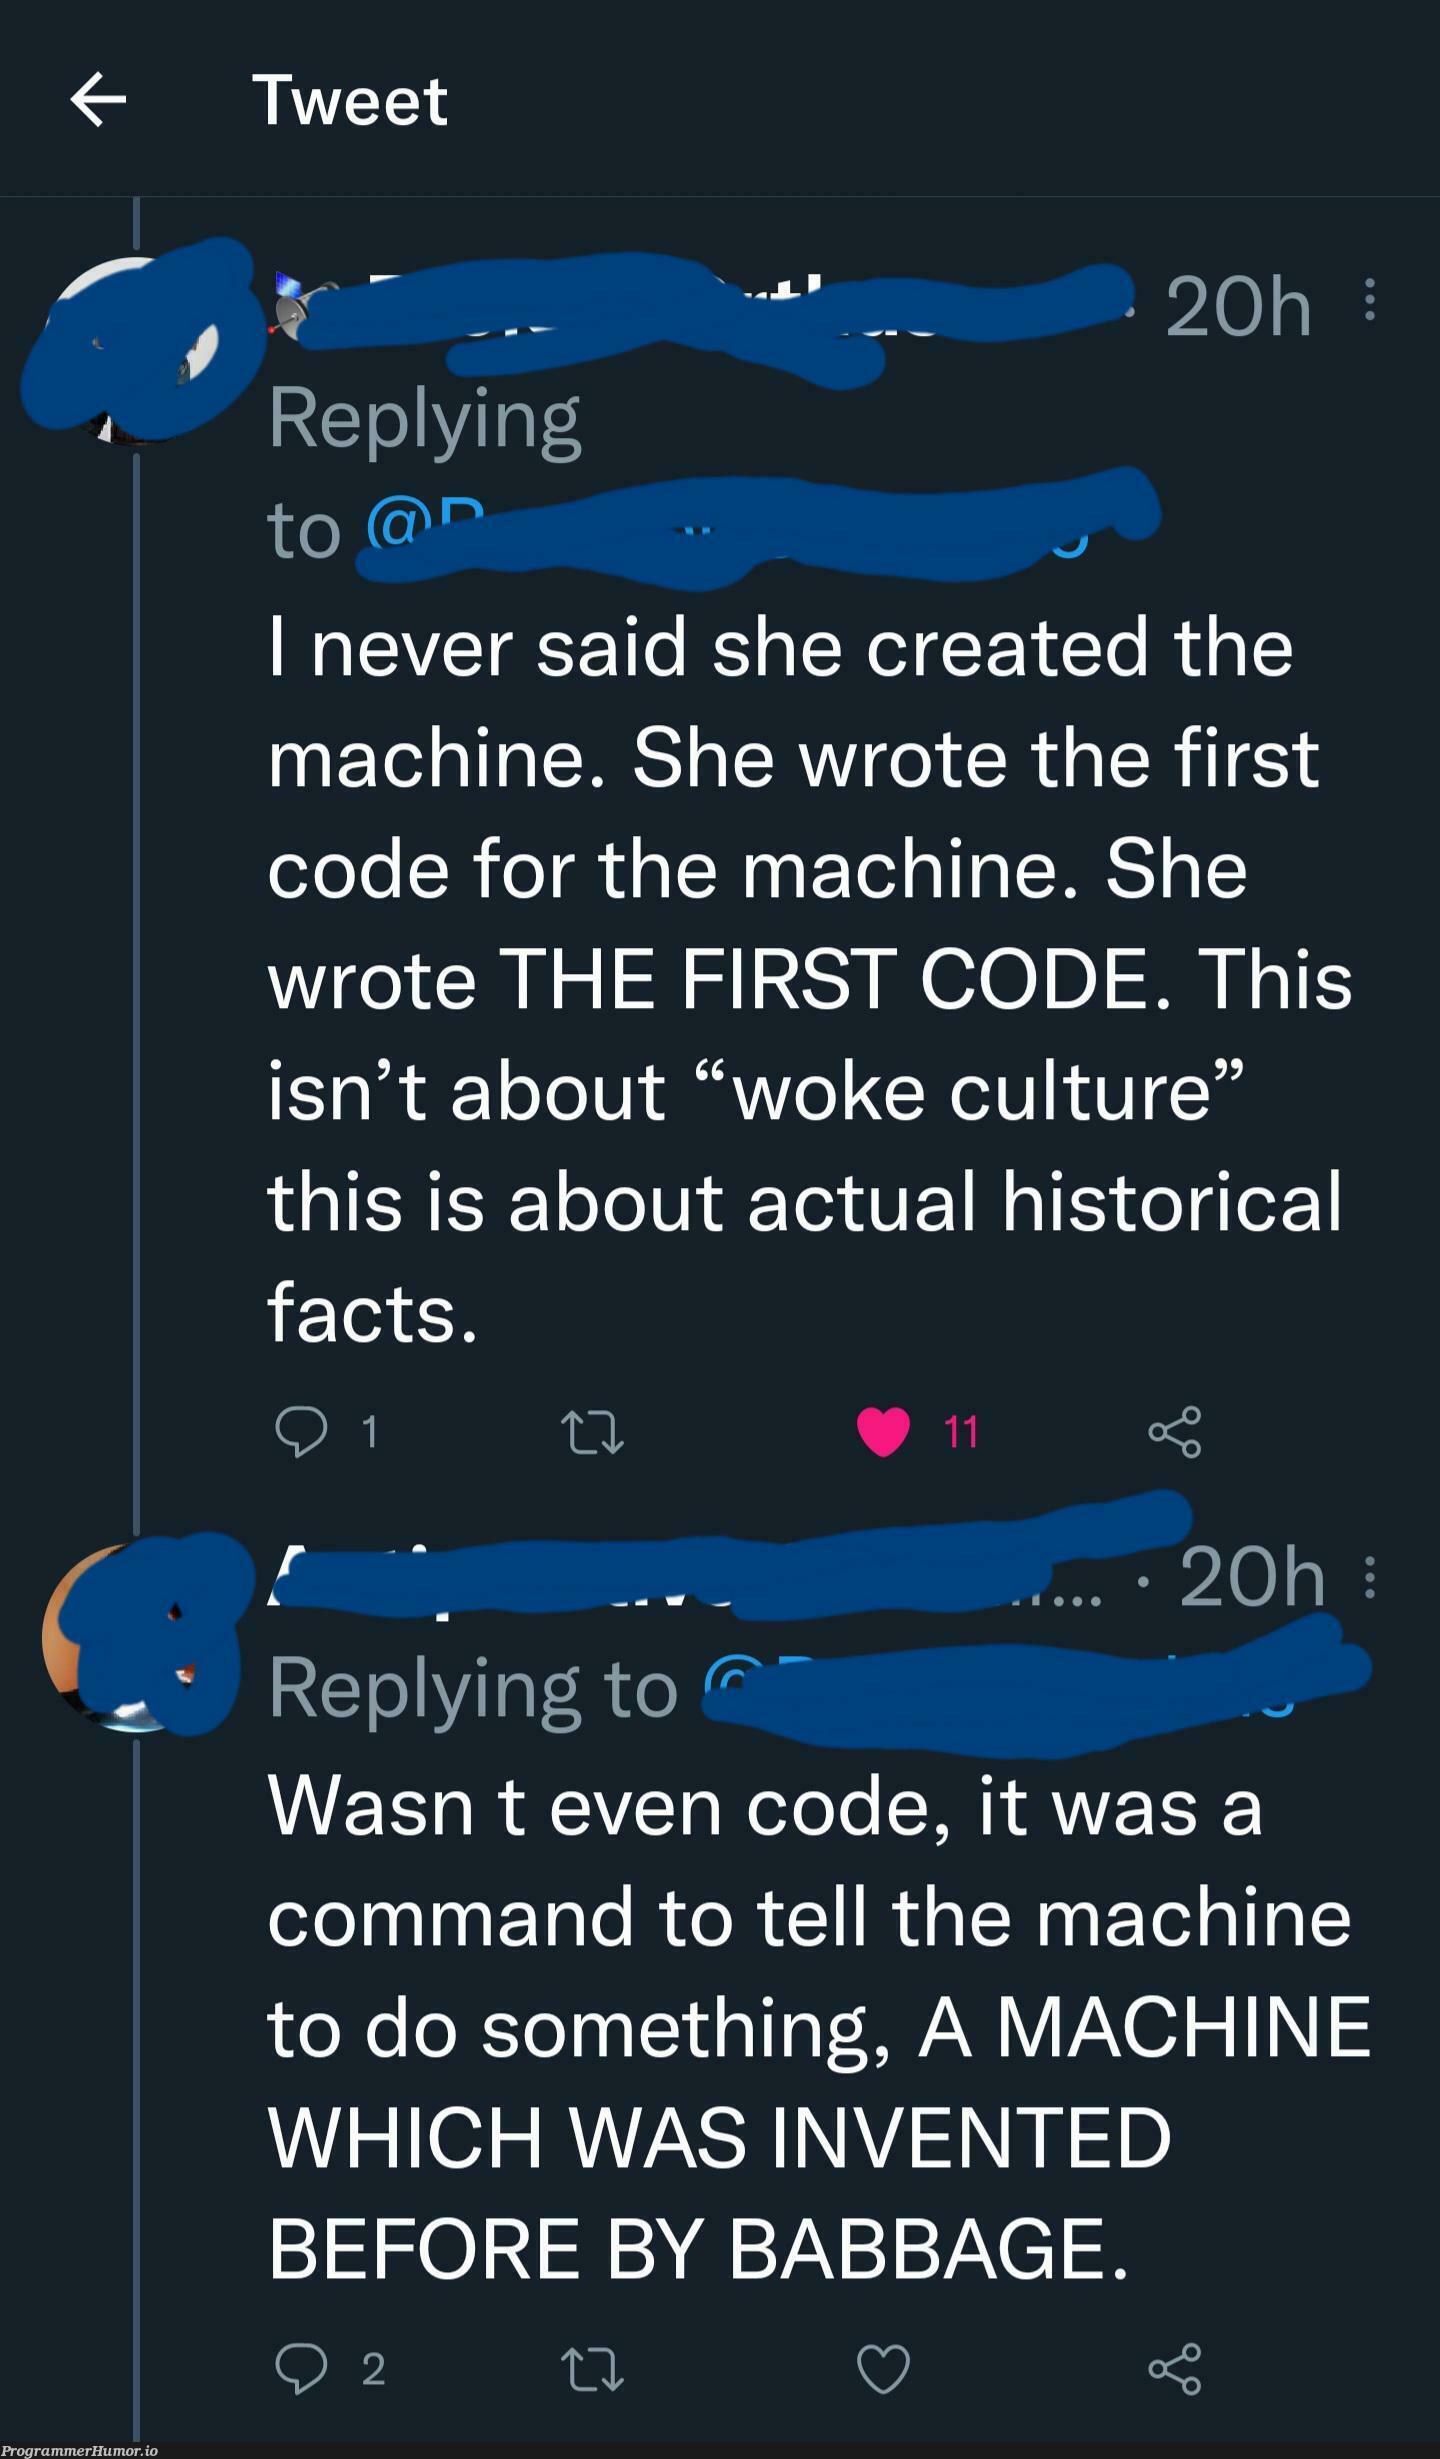 She writes codes